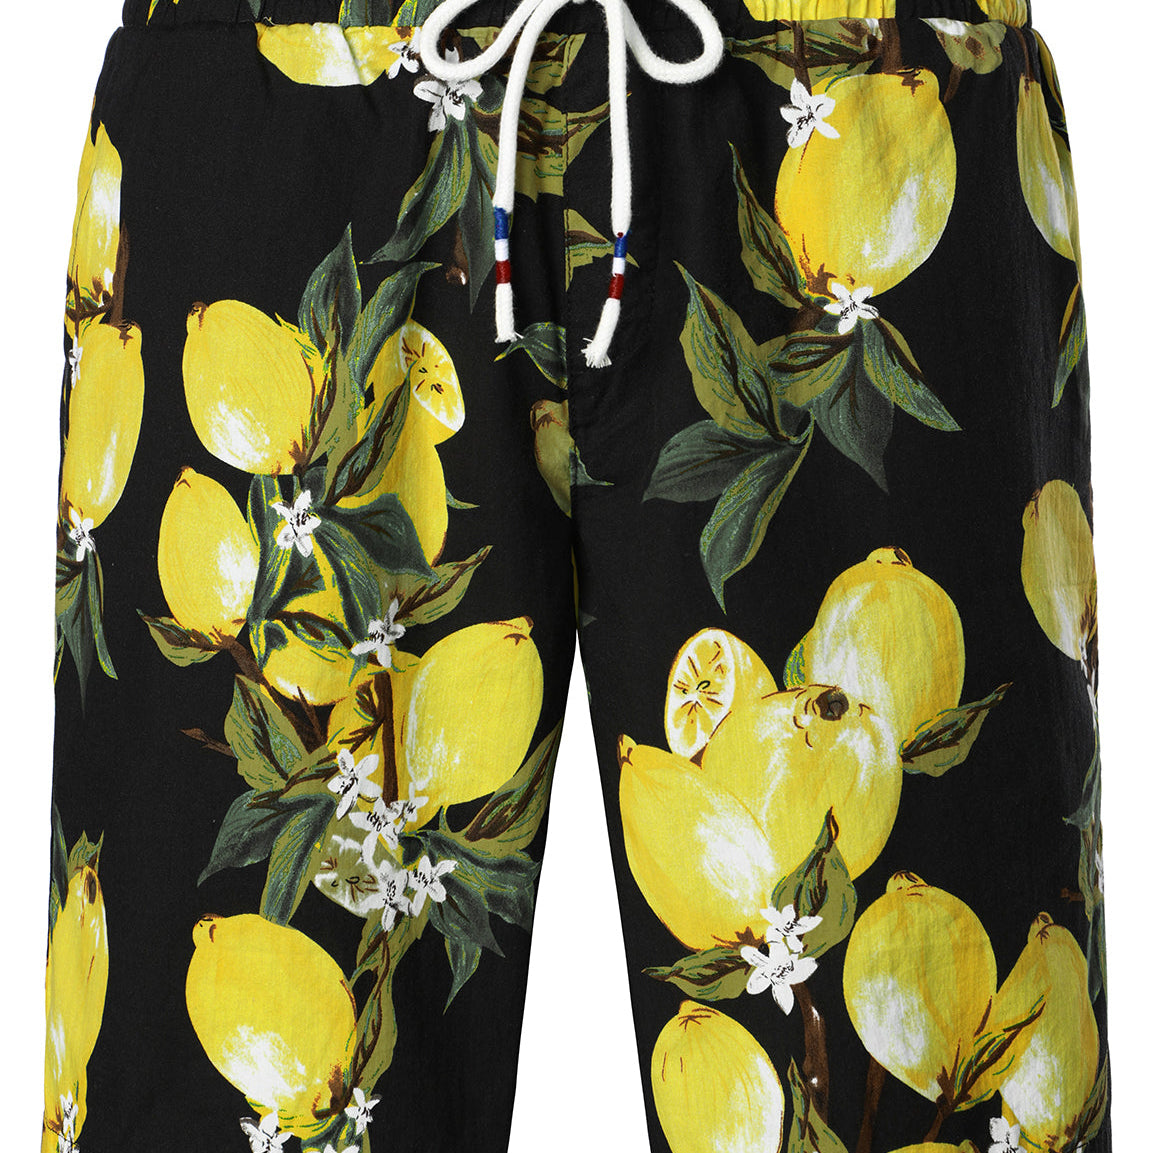 Men's Breathable Tropical Fruit Cotton Yellow Lemon Beach Hawaiian Aloha Summer Shorts